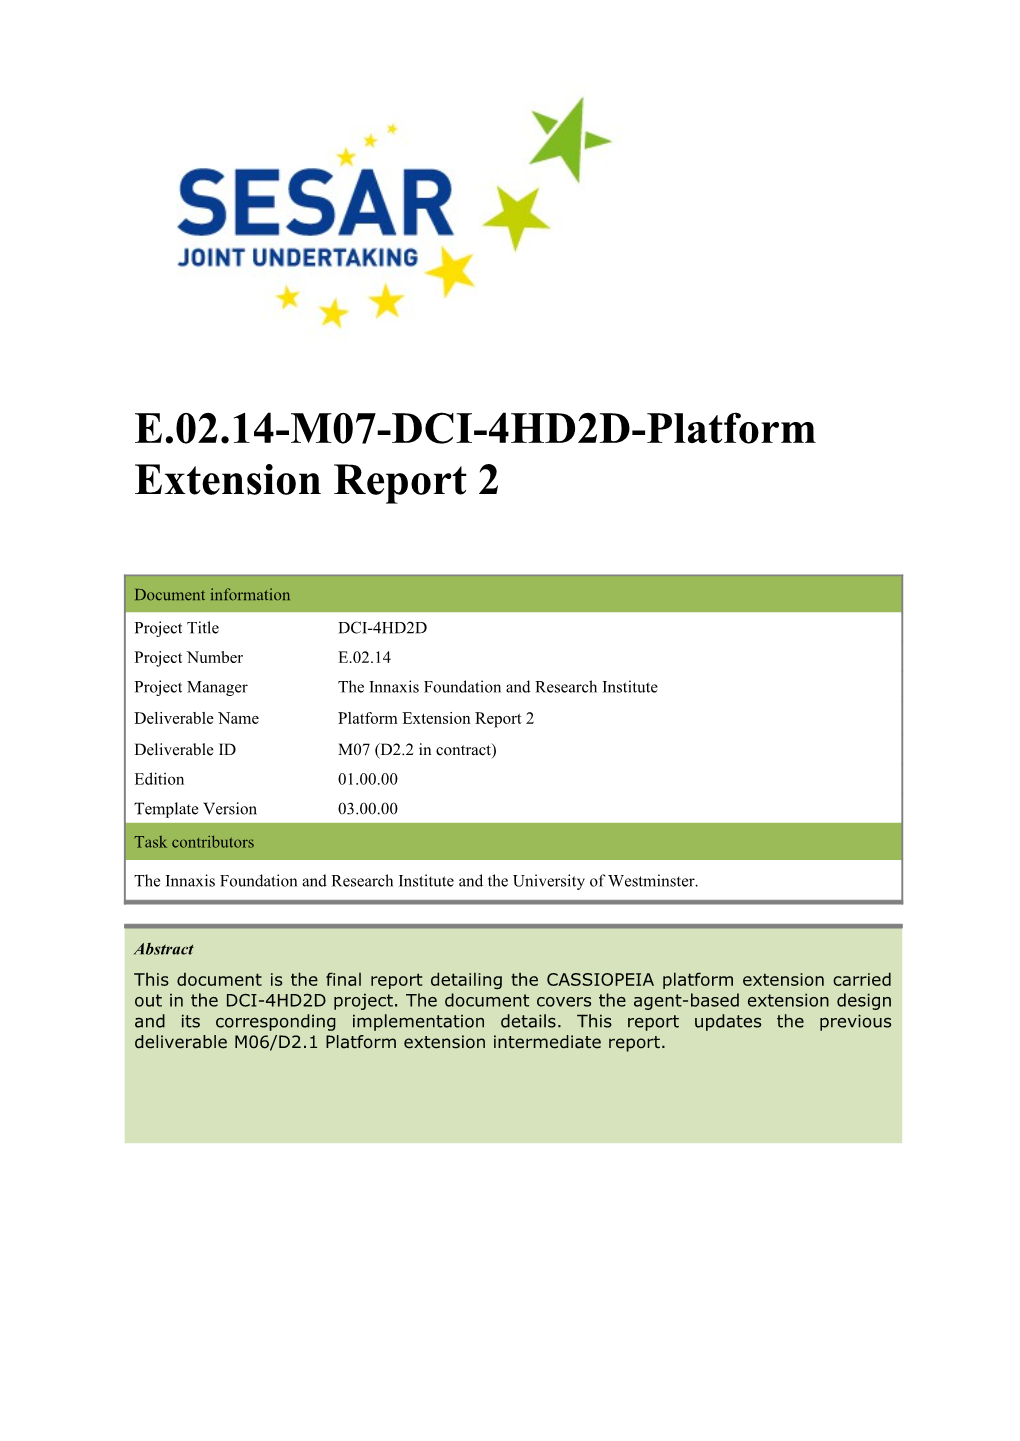 D2.2 Platform Extension Report